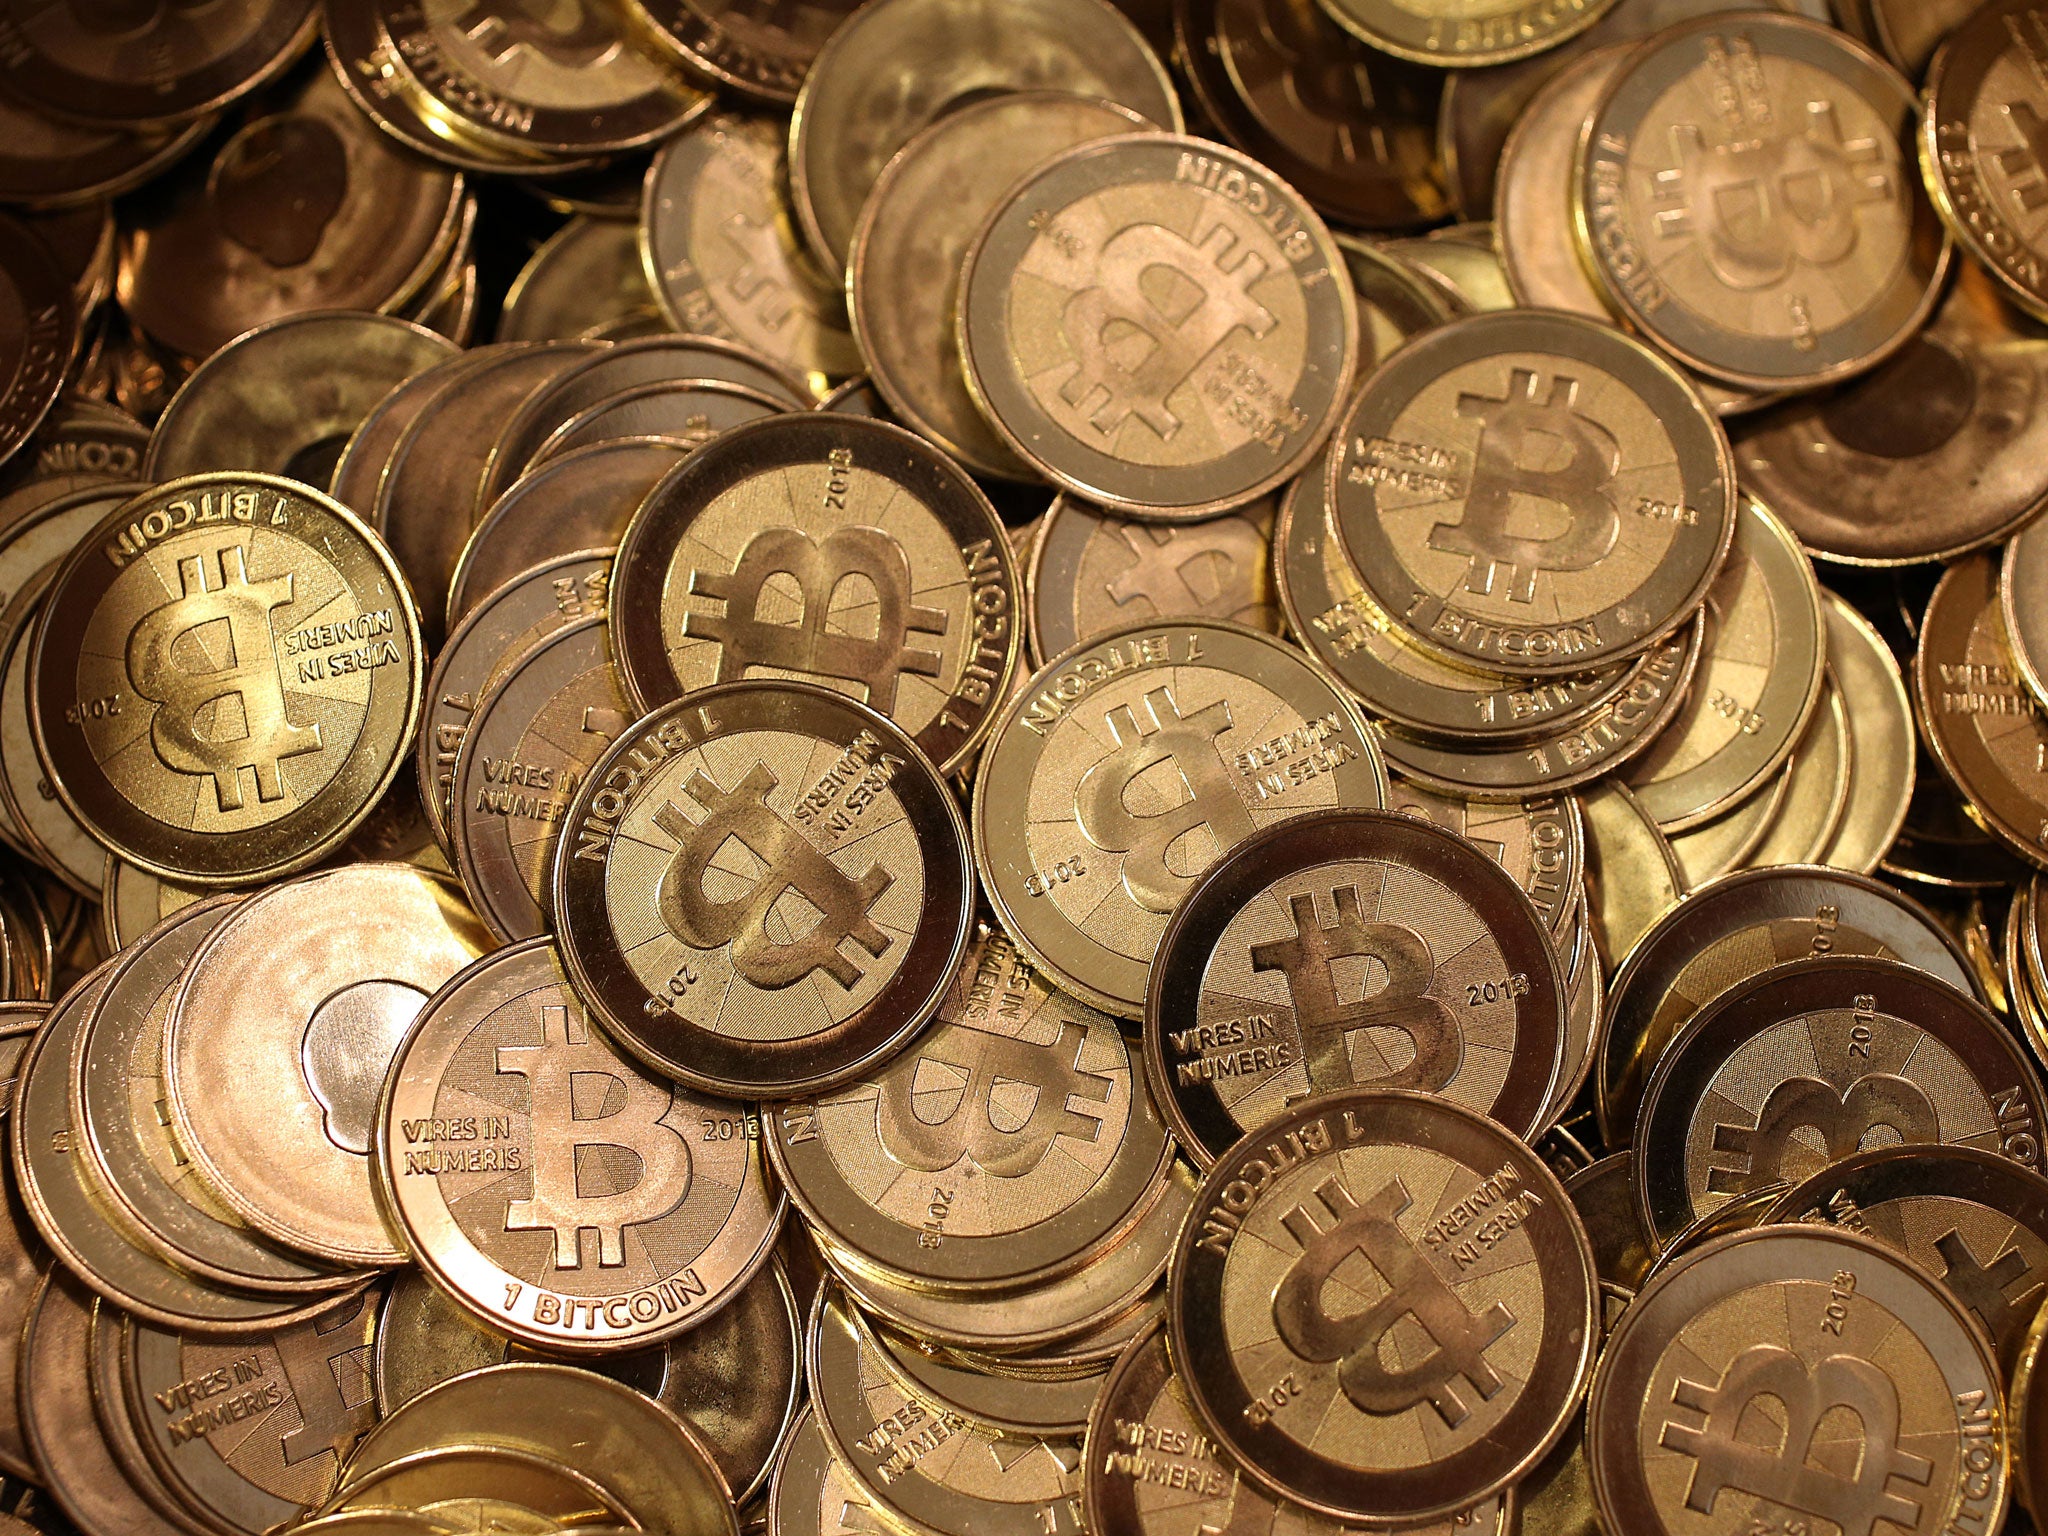 28 million bitcoins seized property